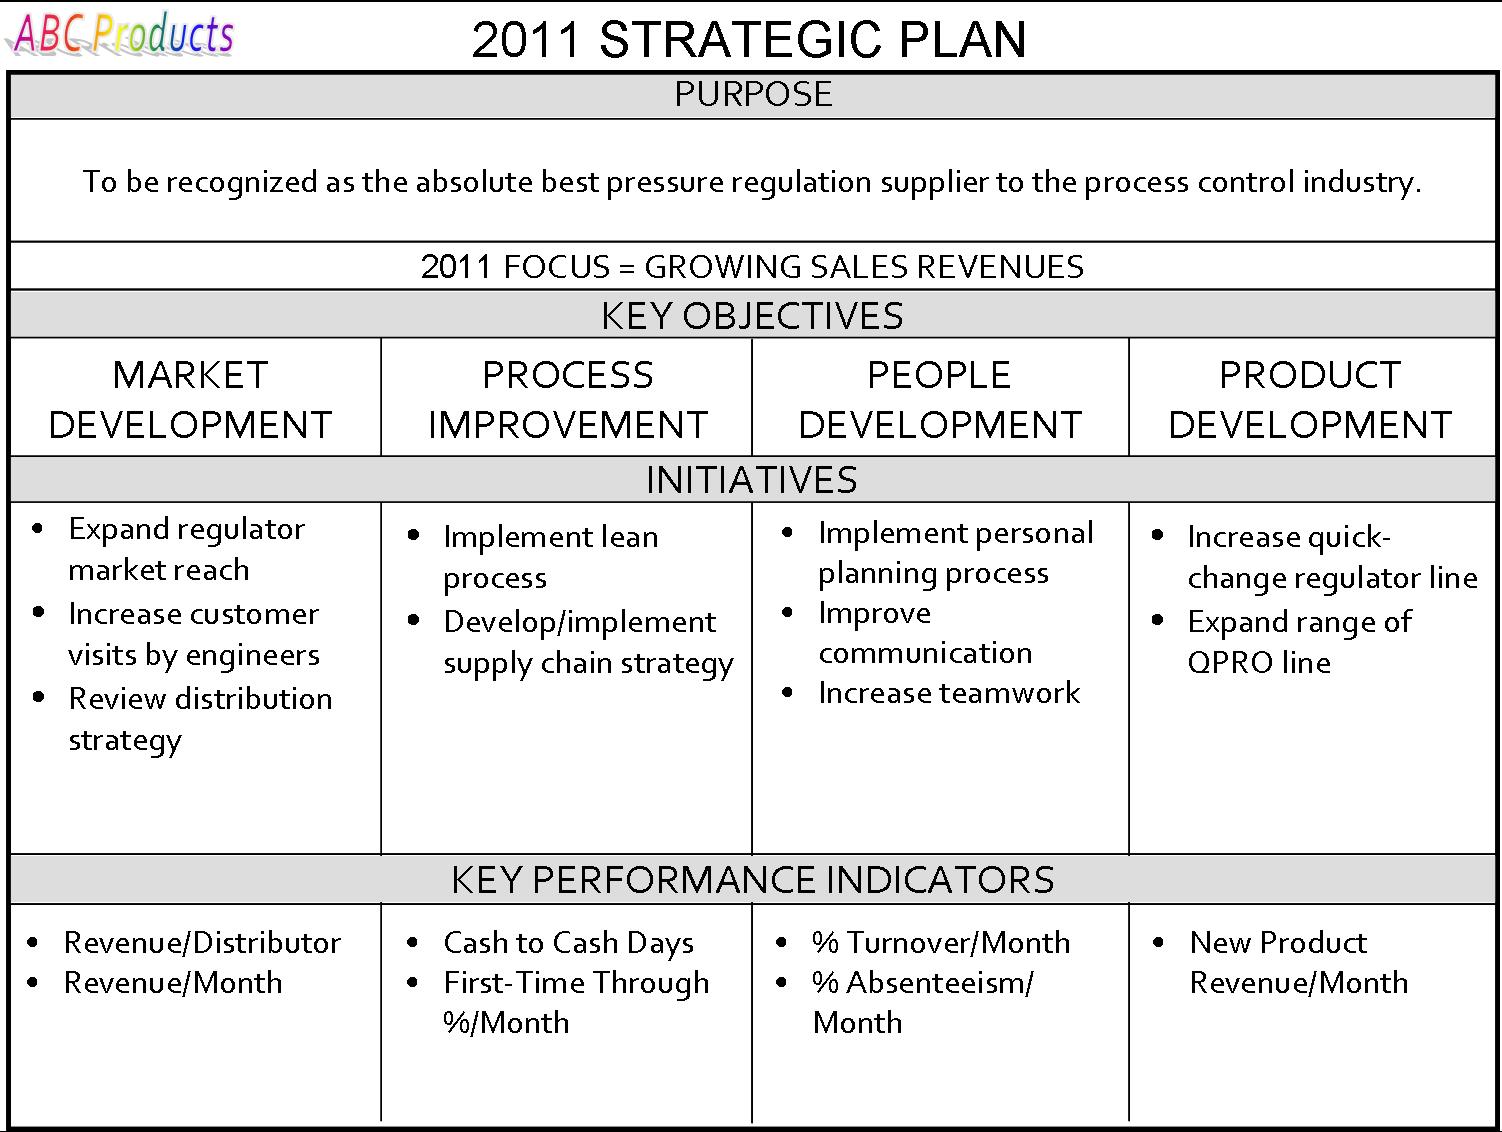 Example of a written business plan